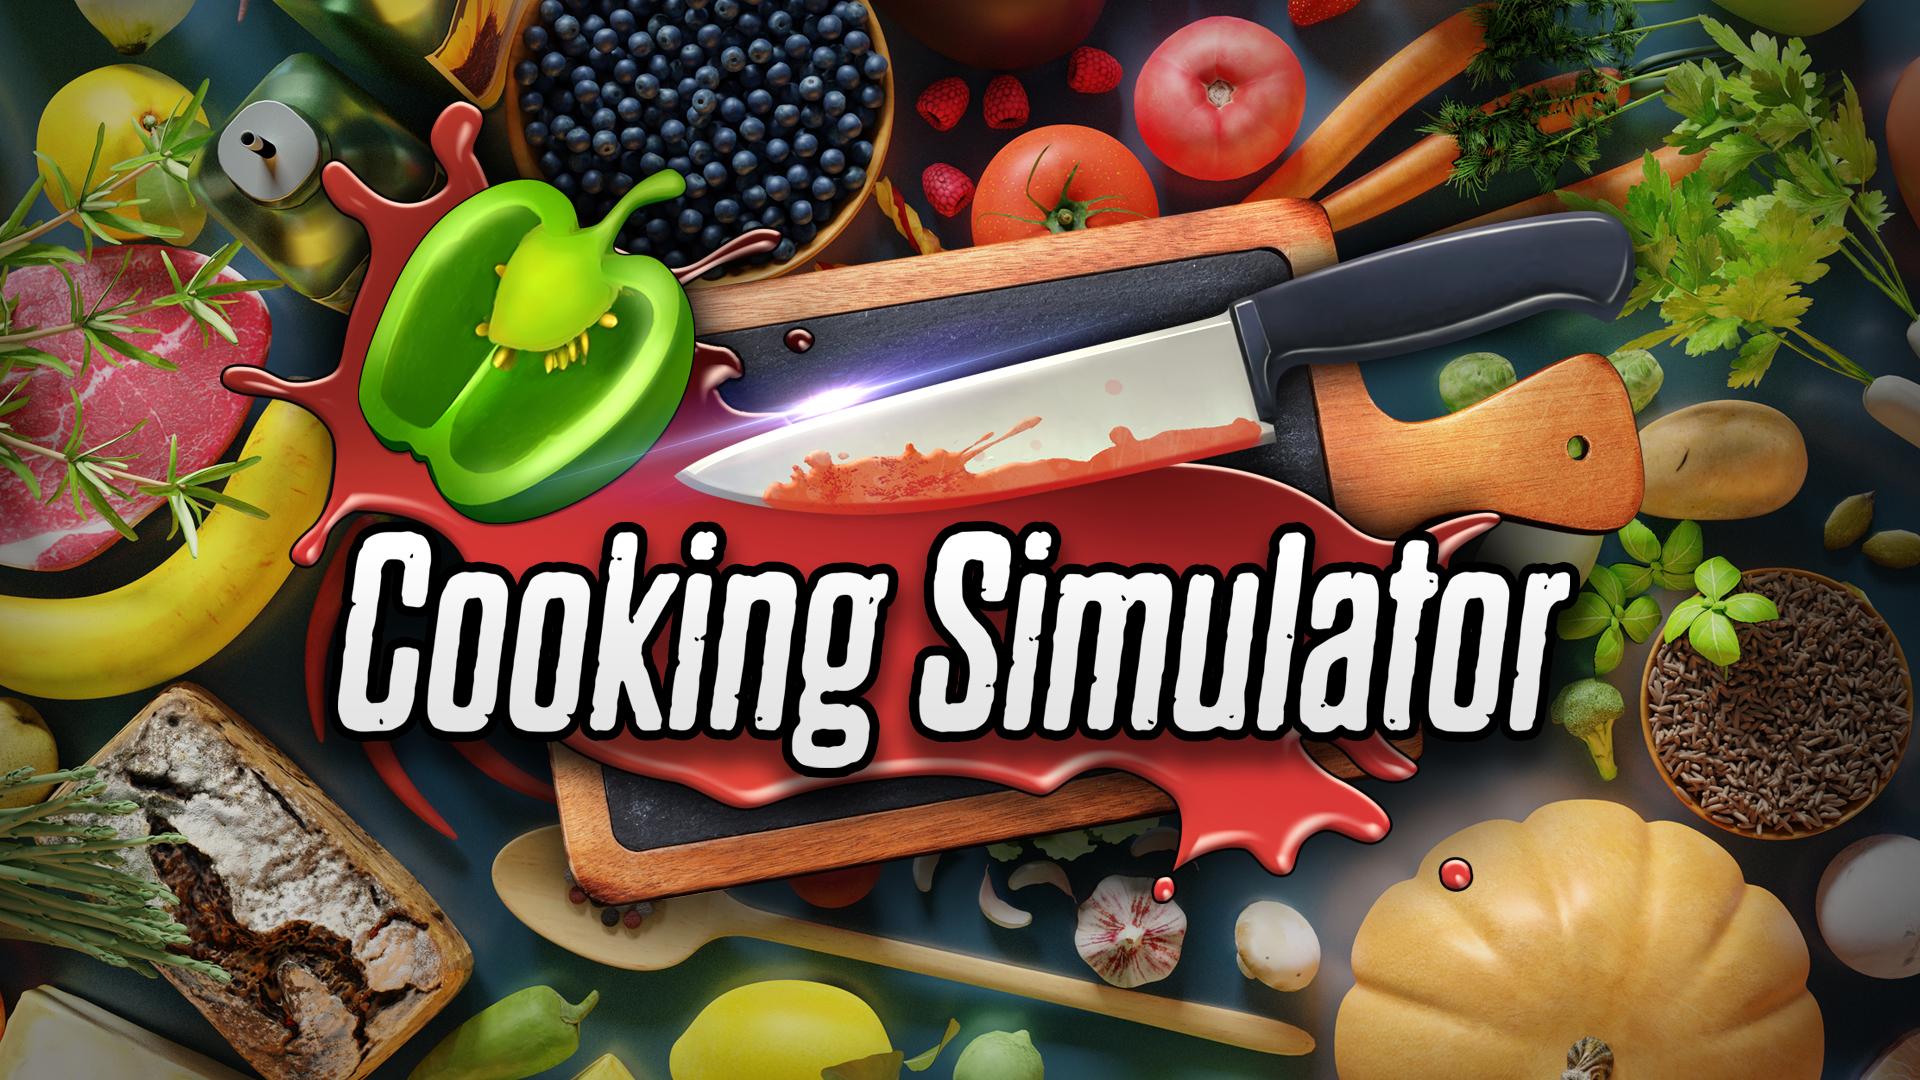 Cooking SCooking Simulator Full Version PC Game Downloadimulator Full Version PC Game Download